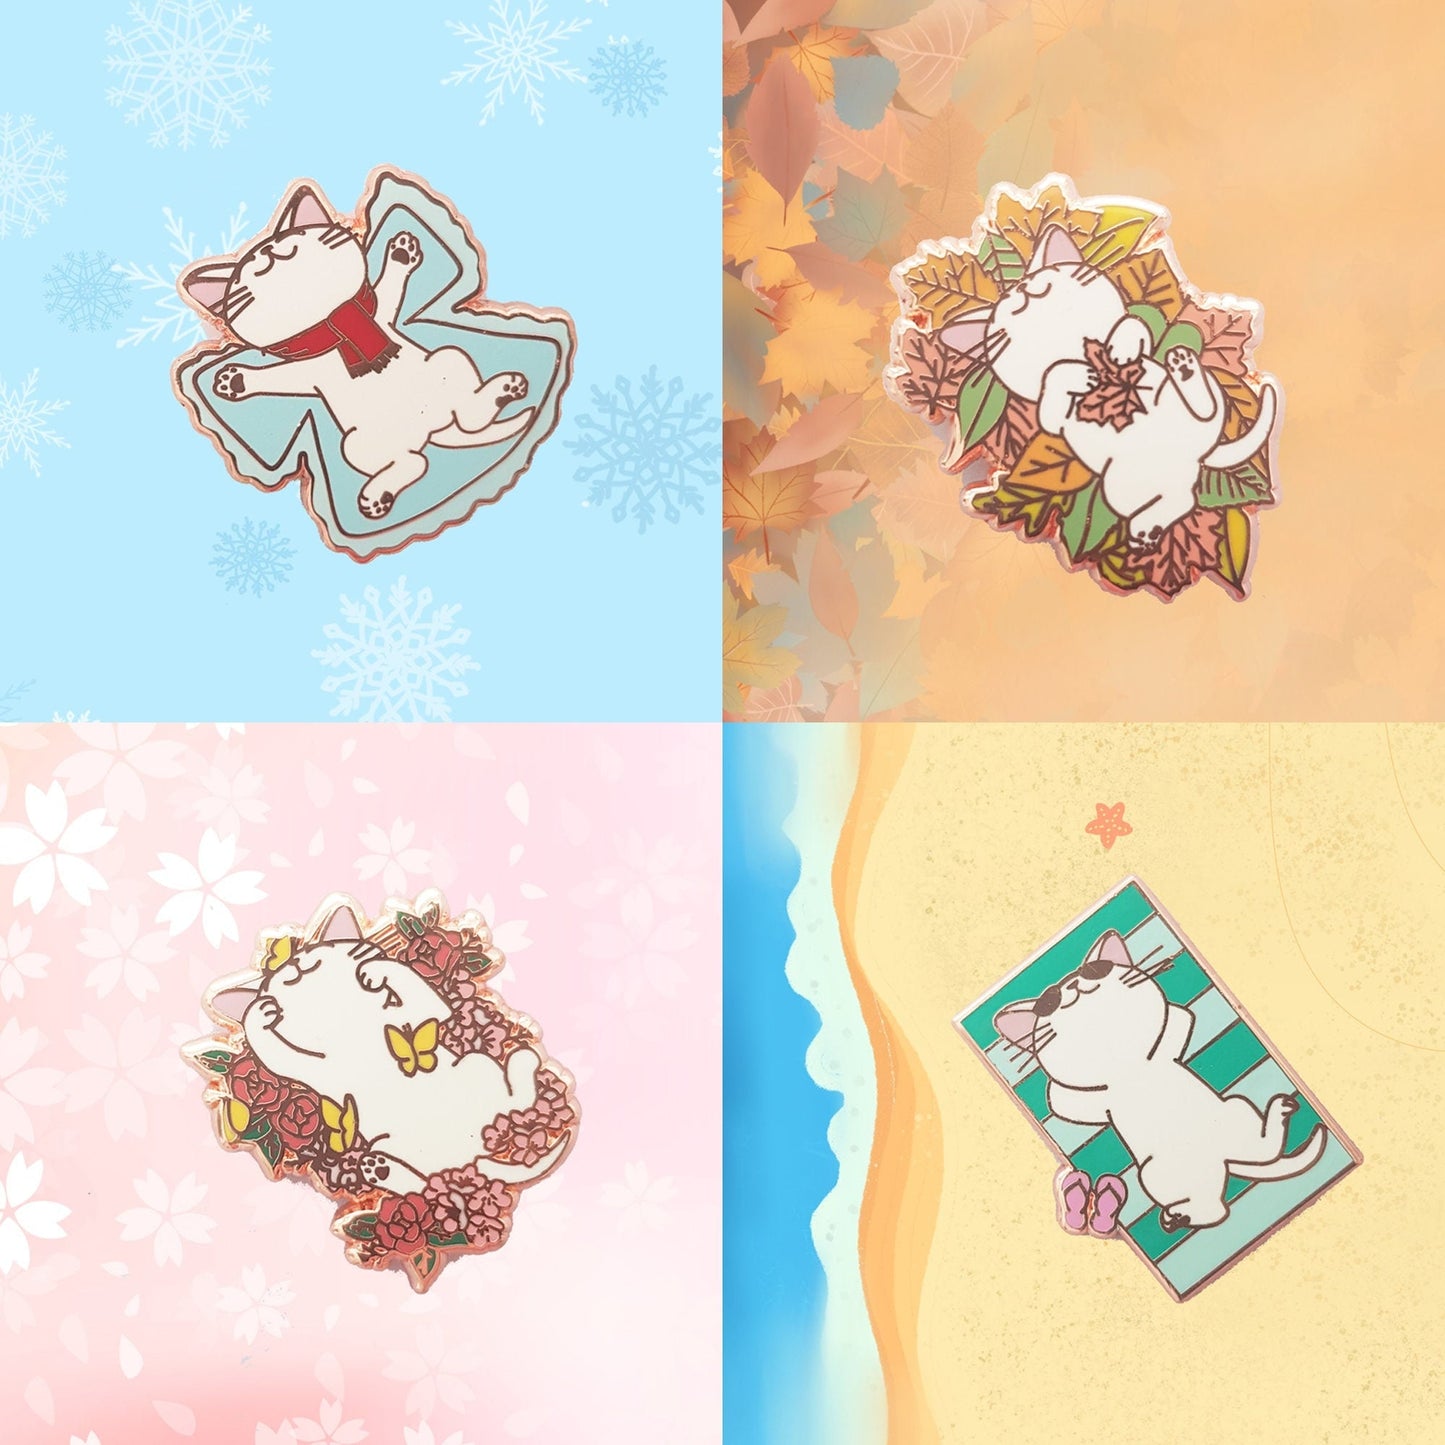 Winter Snow Angel Kitty - Small Enamel Pin, Pins, Brooches & Lapel Pins